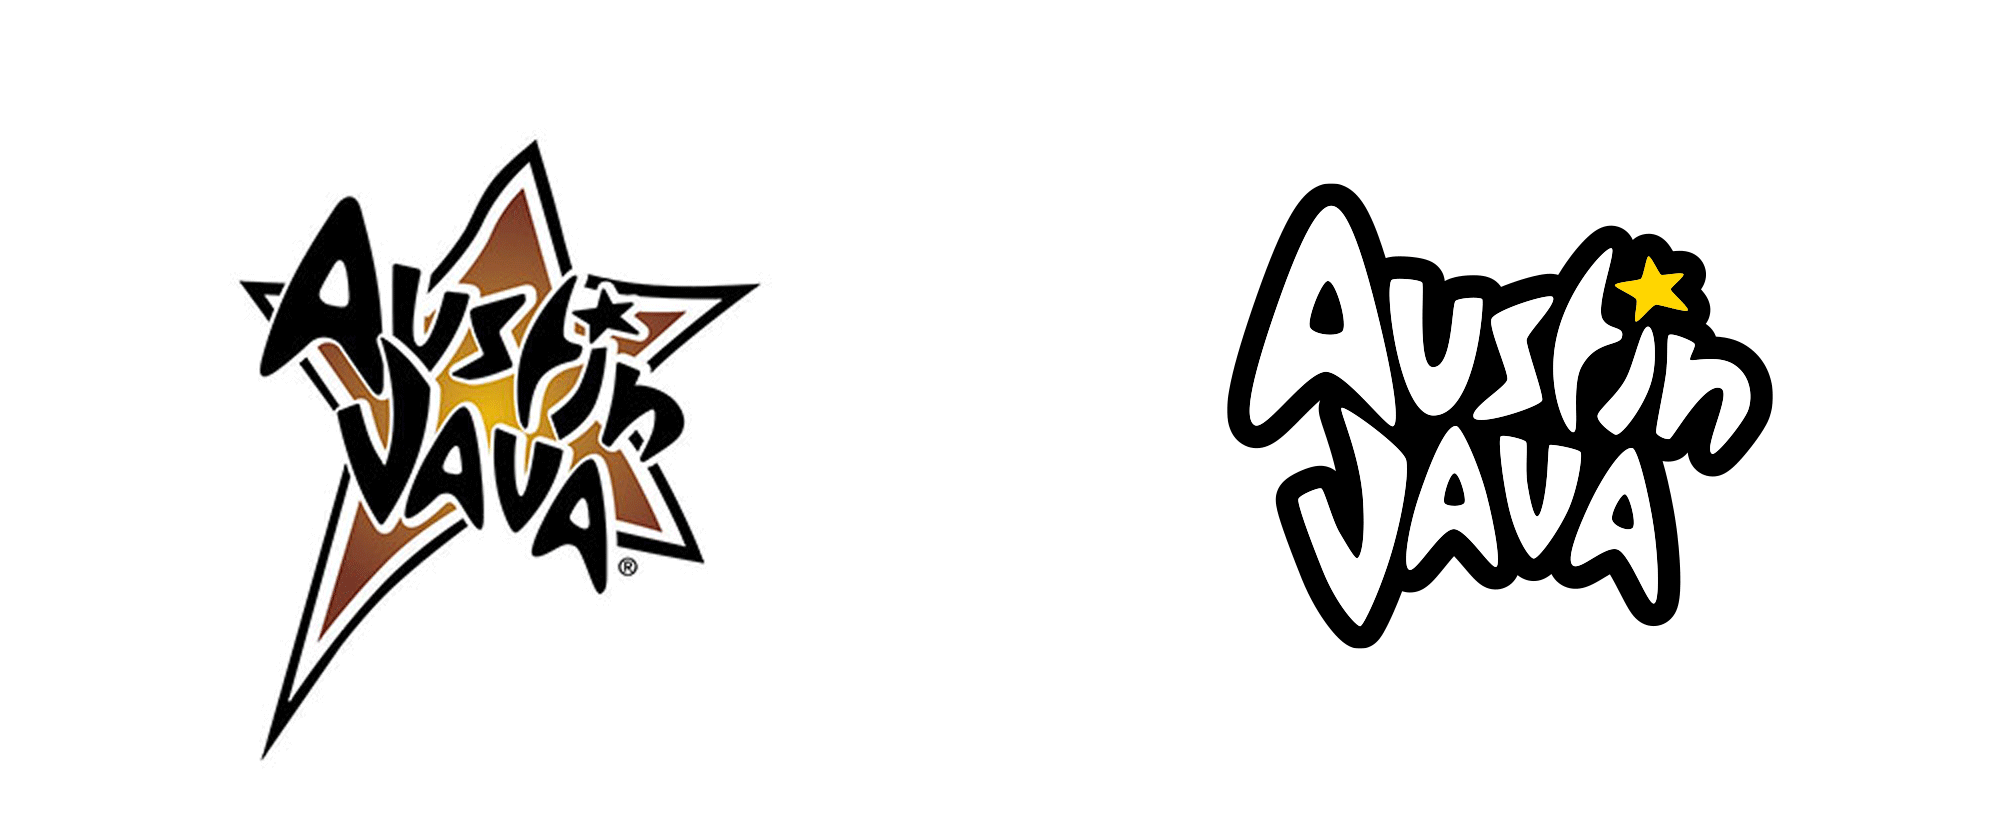 Austin Logo - Brand New: New Logo and Identity for Austin Java